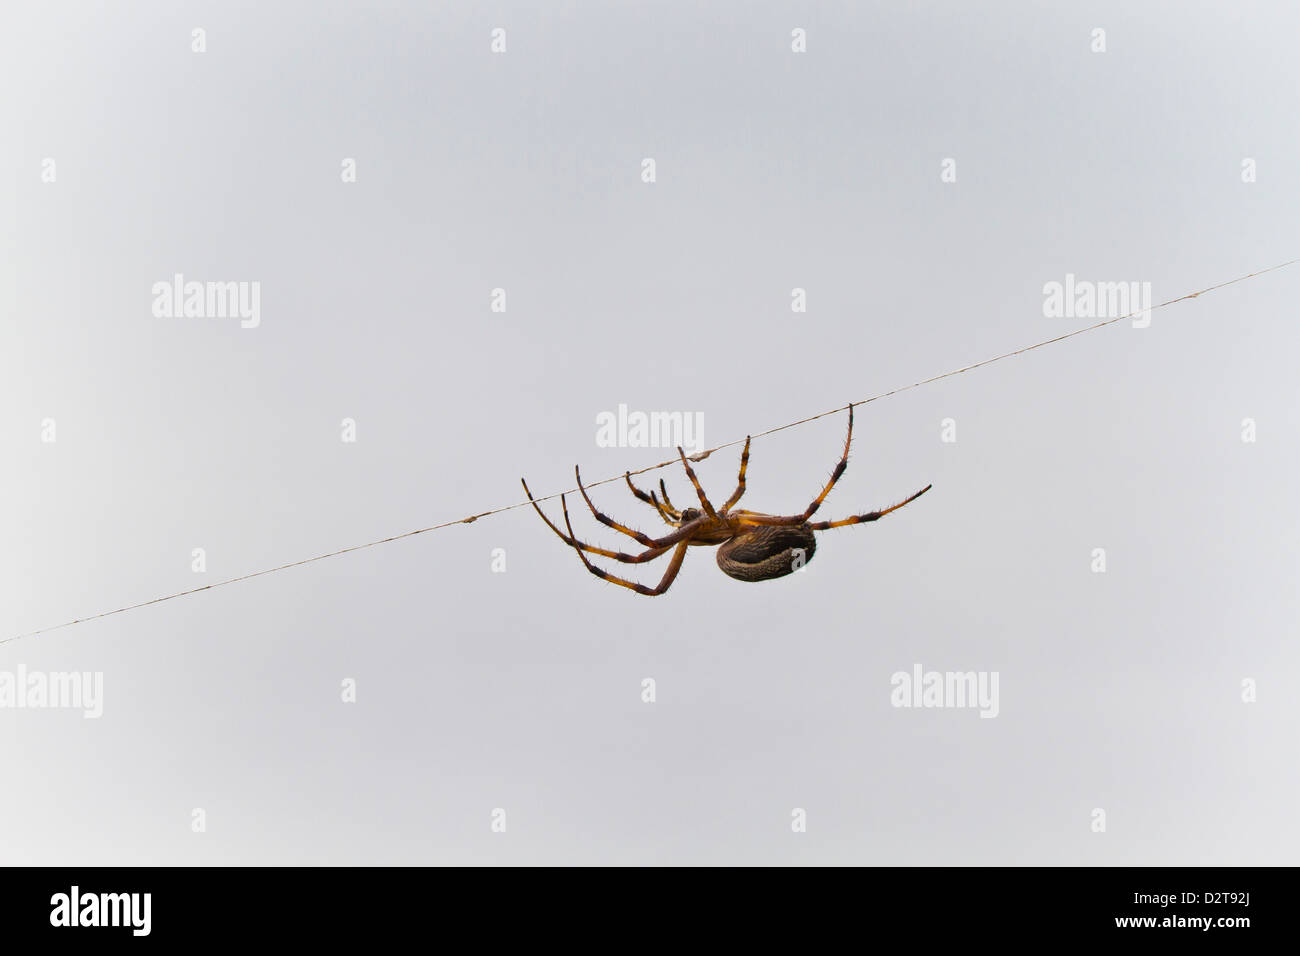 Spider on thread, Cerro Dragon, Santa Cruz Island, Galapagos Islands, Ecuador, South America Stock Photo